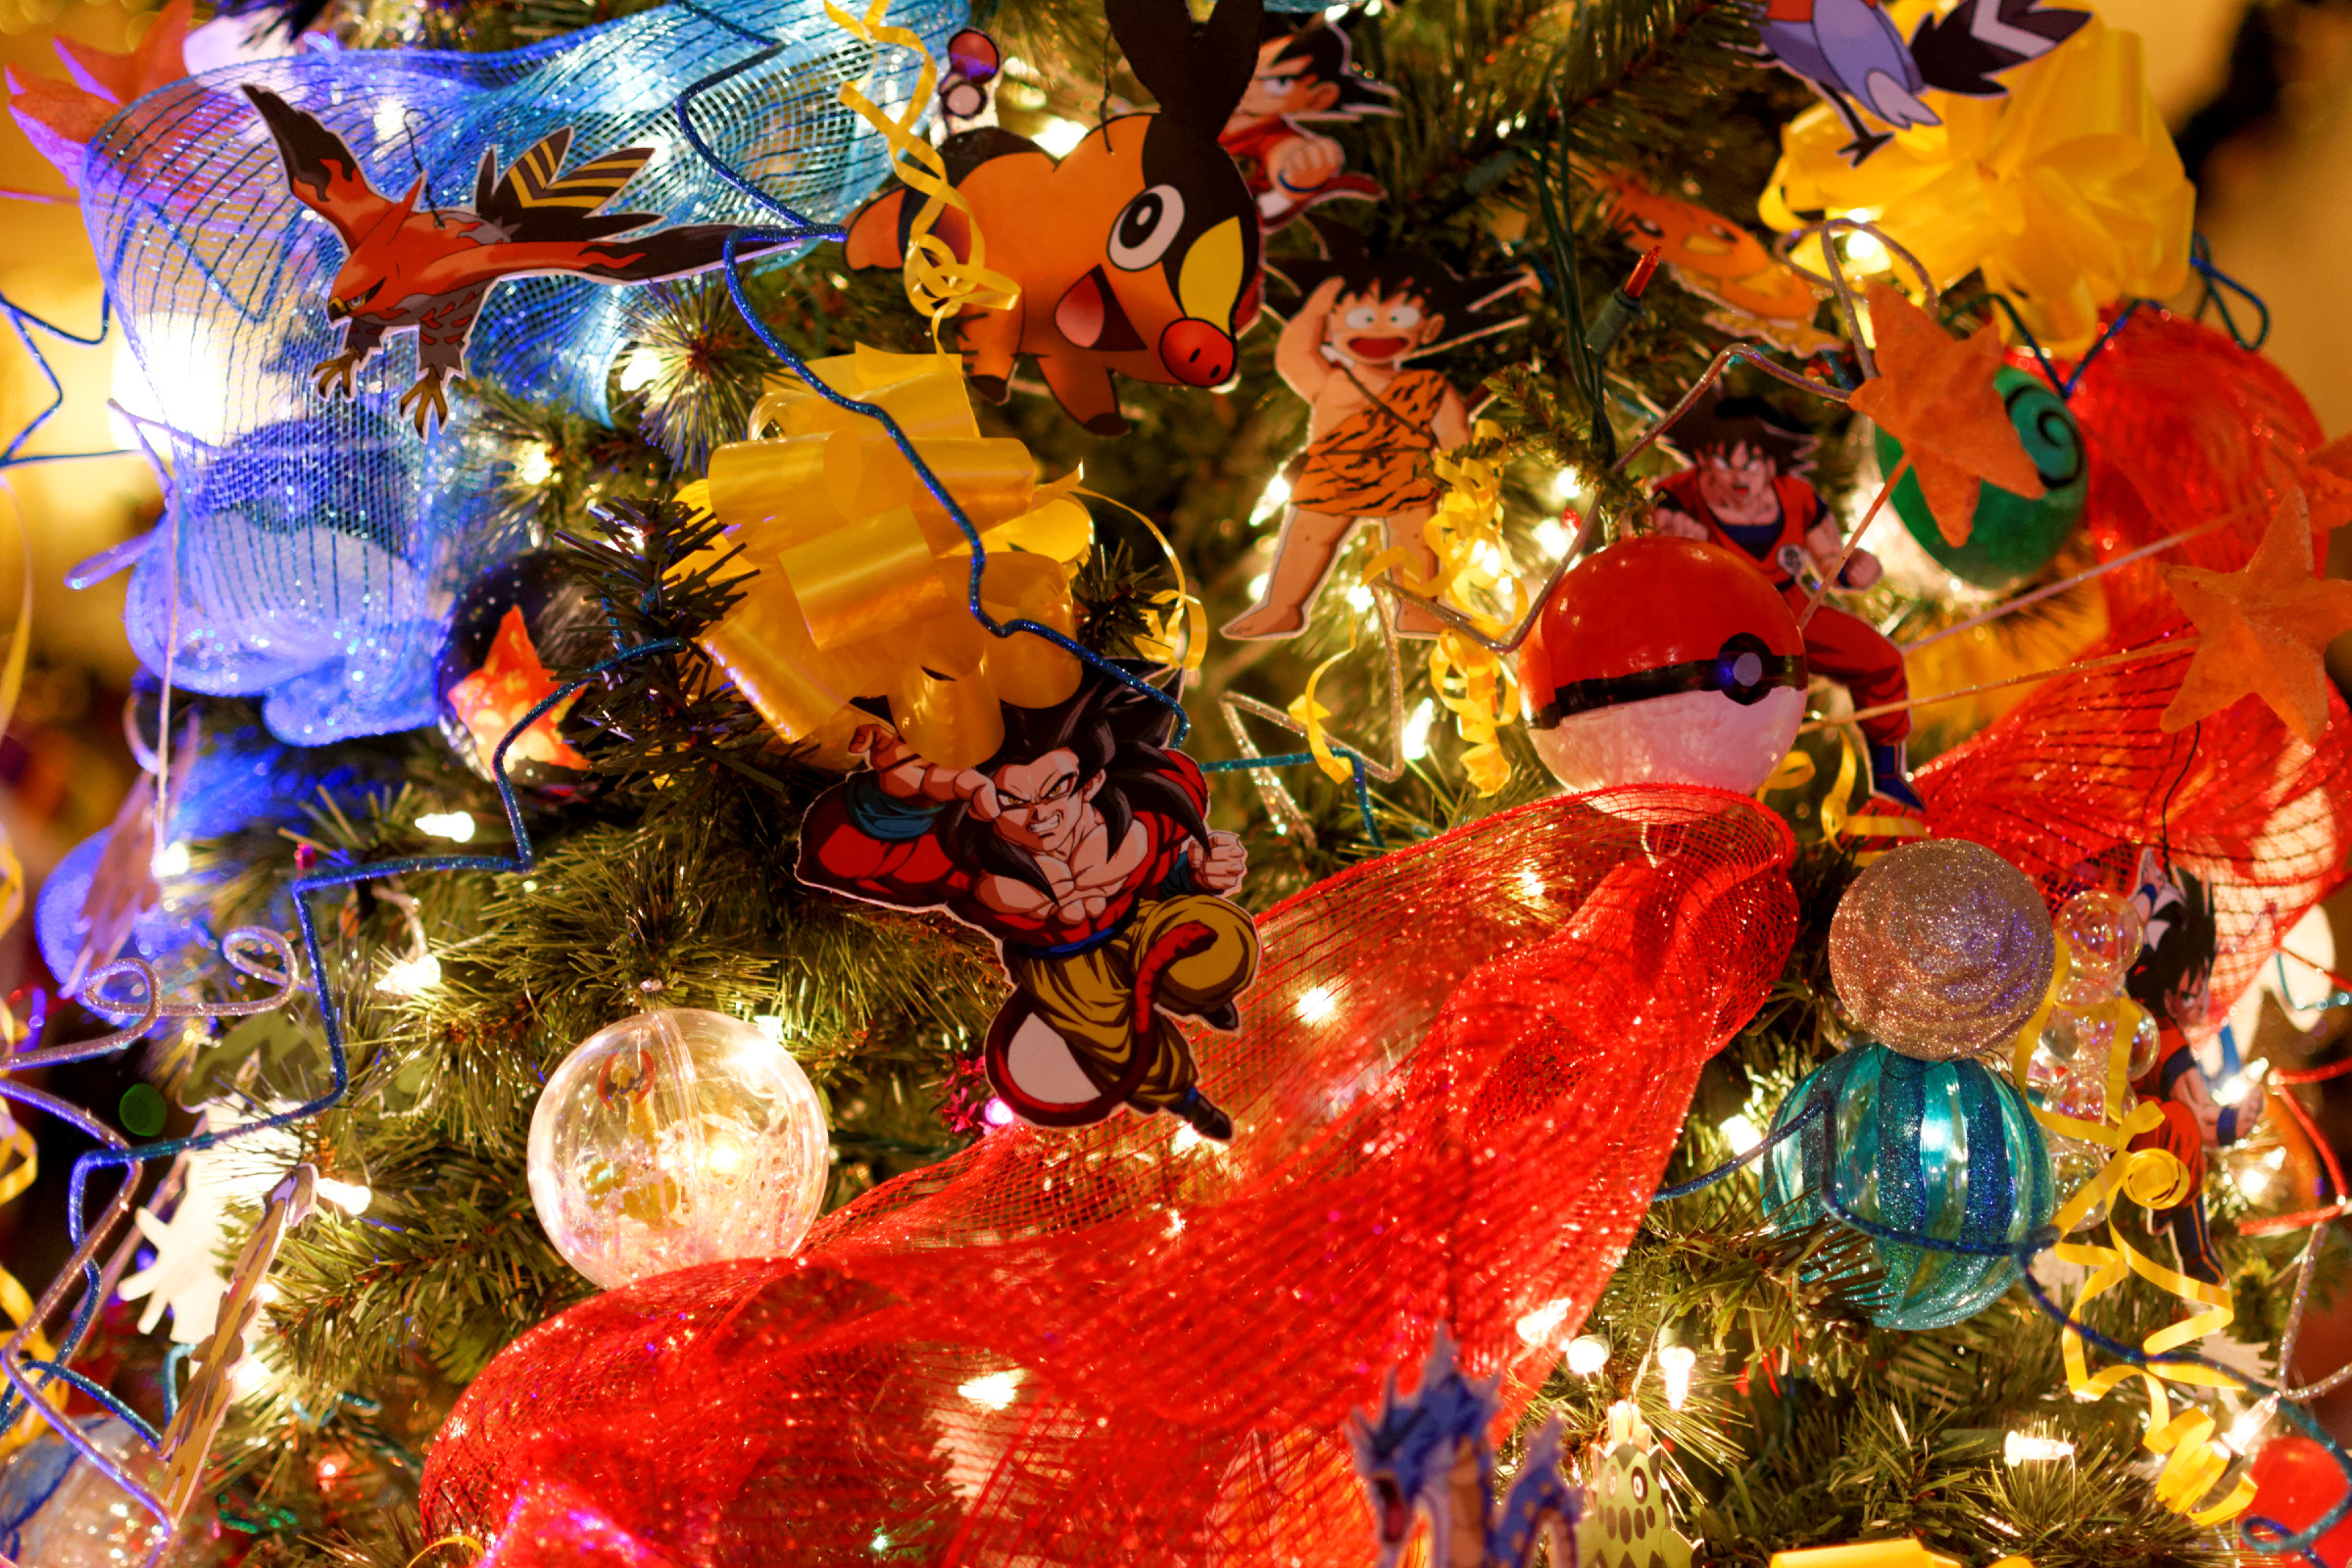 File:Anime Christmas Tree (11701847593).jpg - Wikimedia Commons